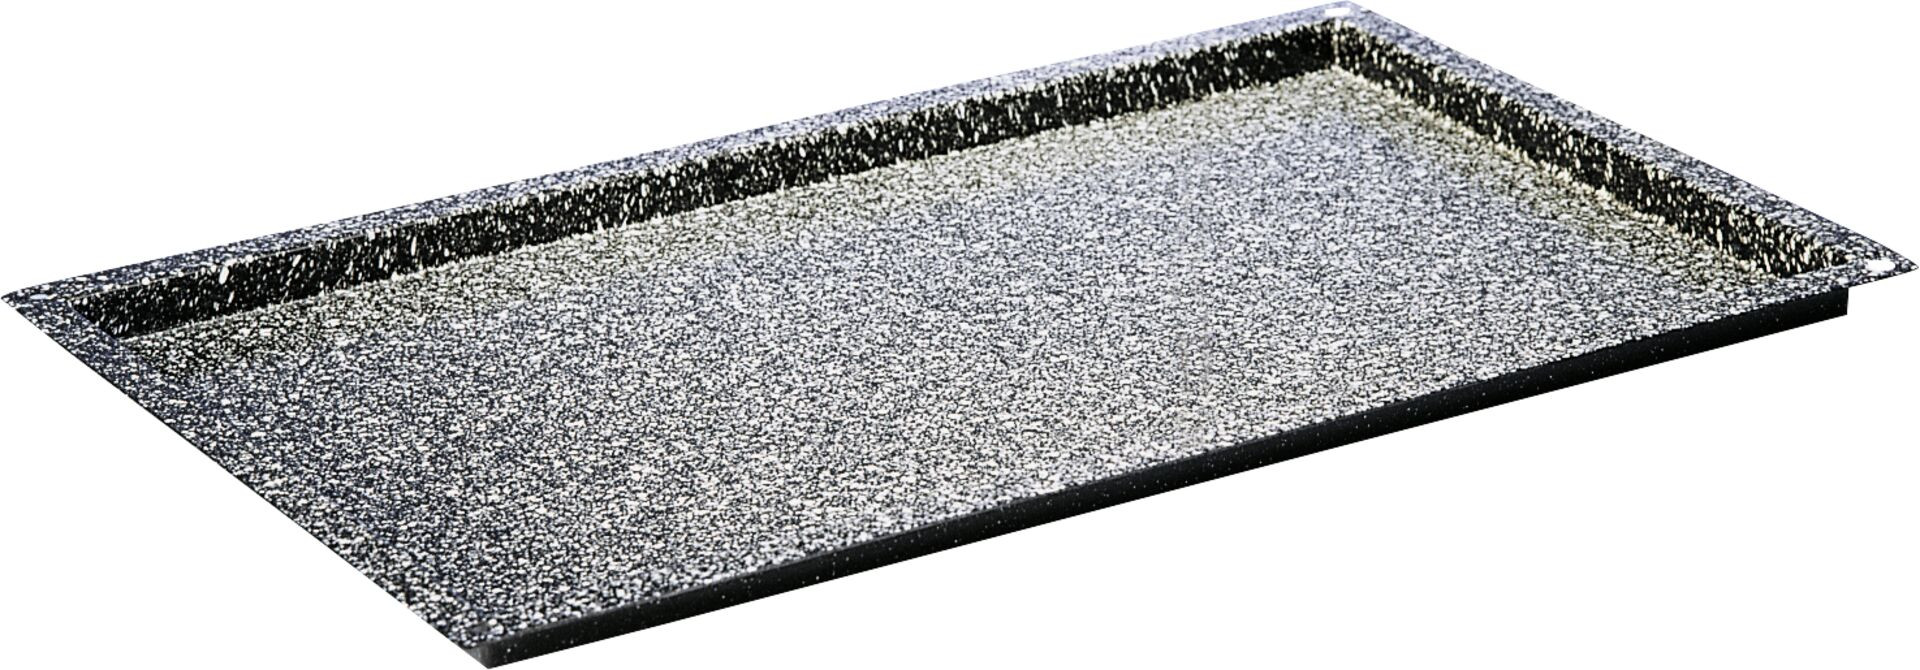 Konvektomatenblech GN, Granit-Emaille 1/1 8cm